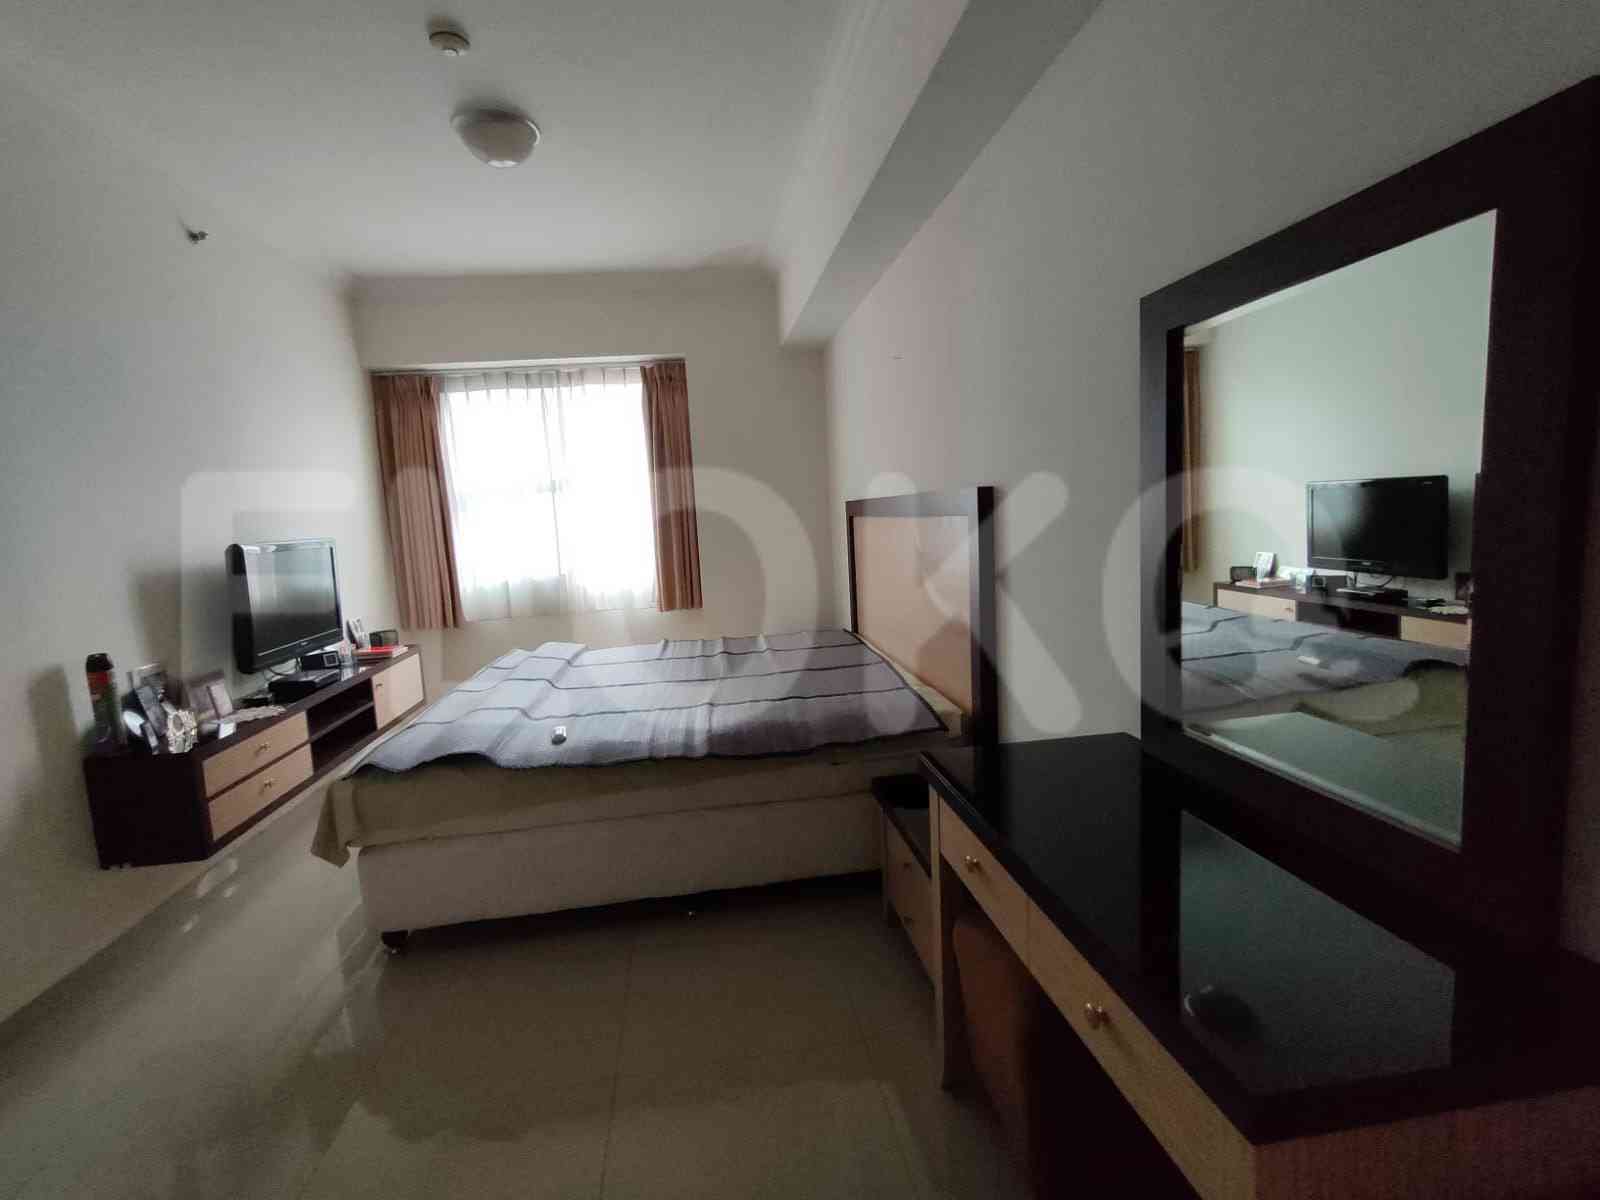 2 Bedroom on 16th Floor for Rent in Aryaduta Suites Semanggi - fsu92d 5